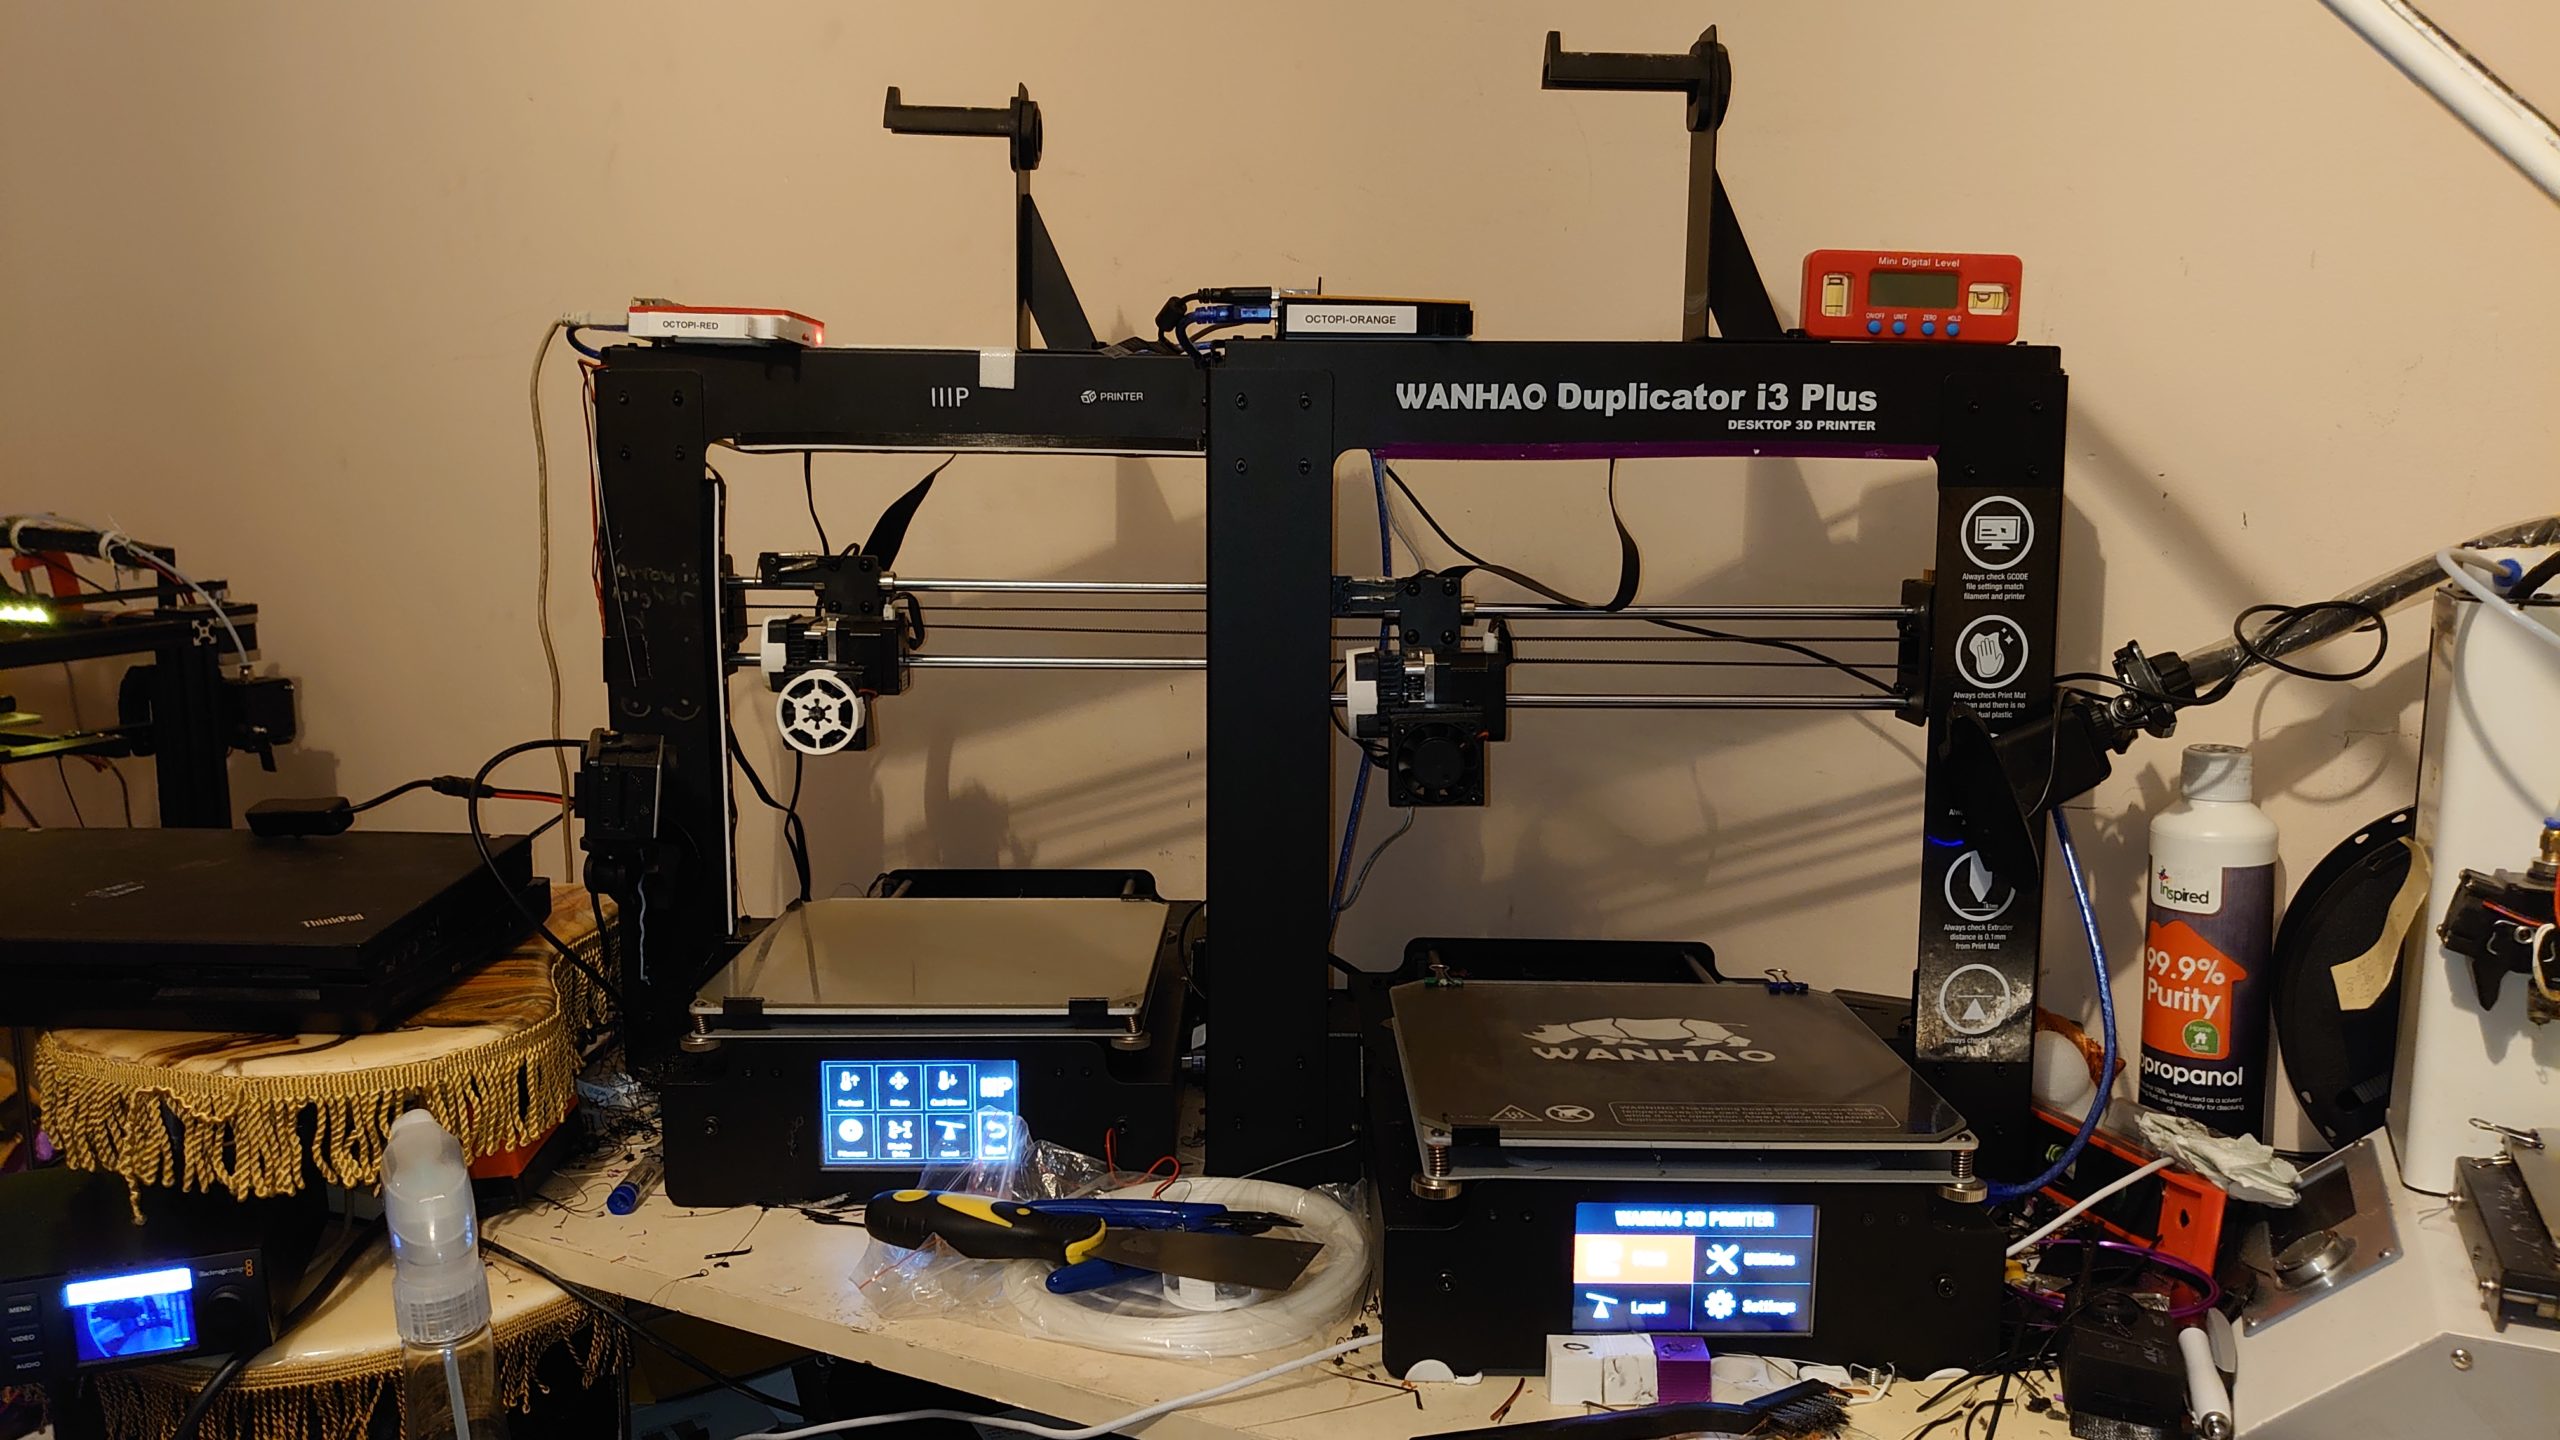 Monoprice Maker Select Plus and Wanhao i3 Plus Duplicator 3D printers